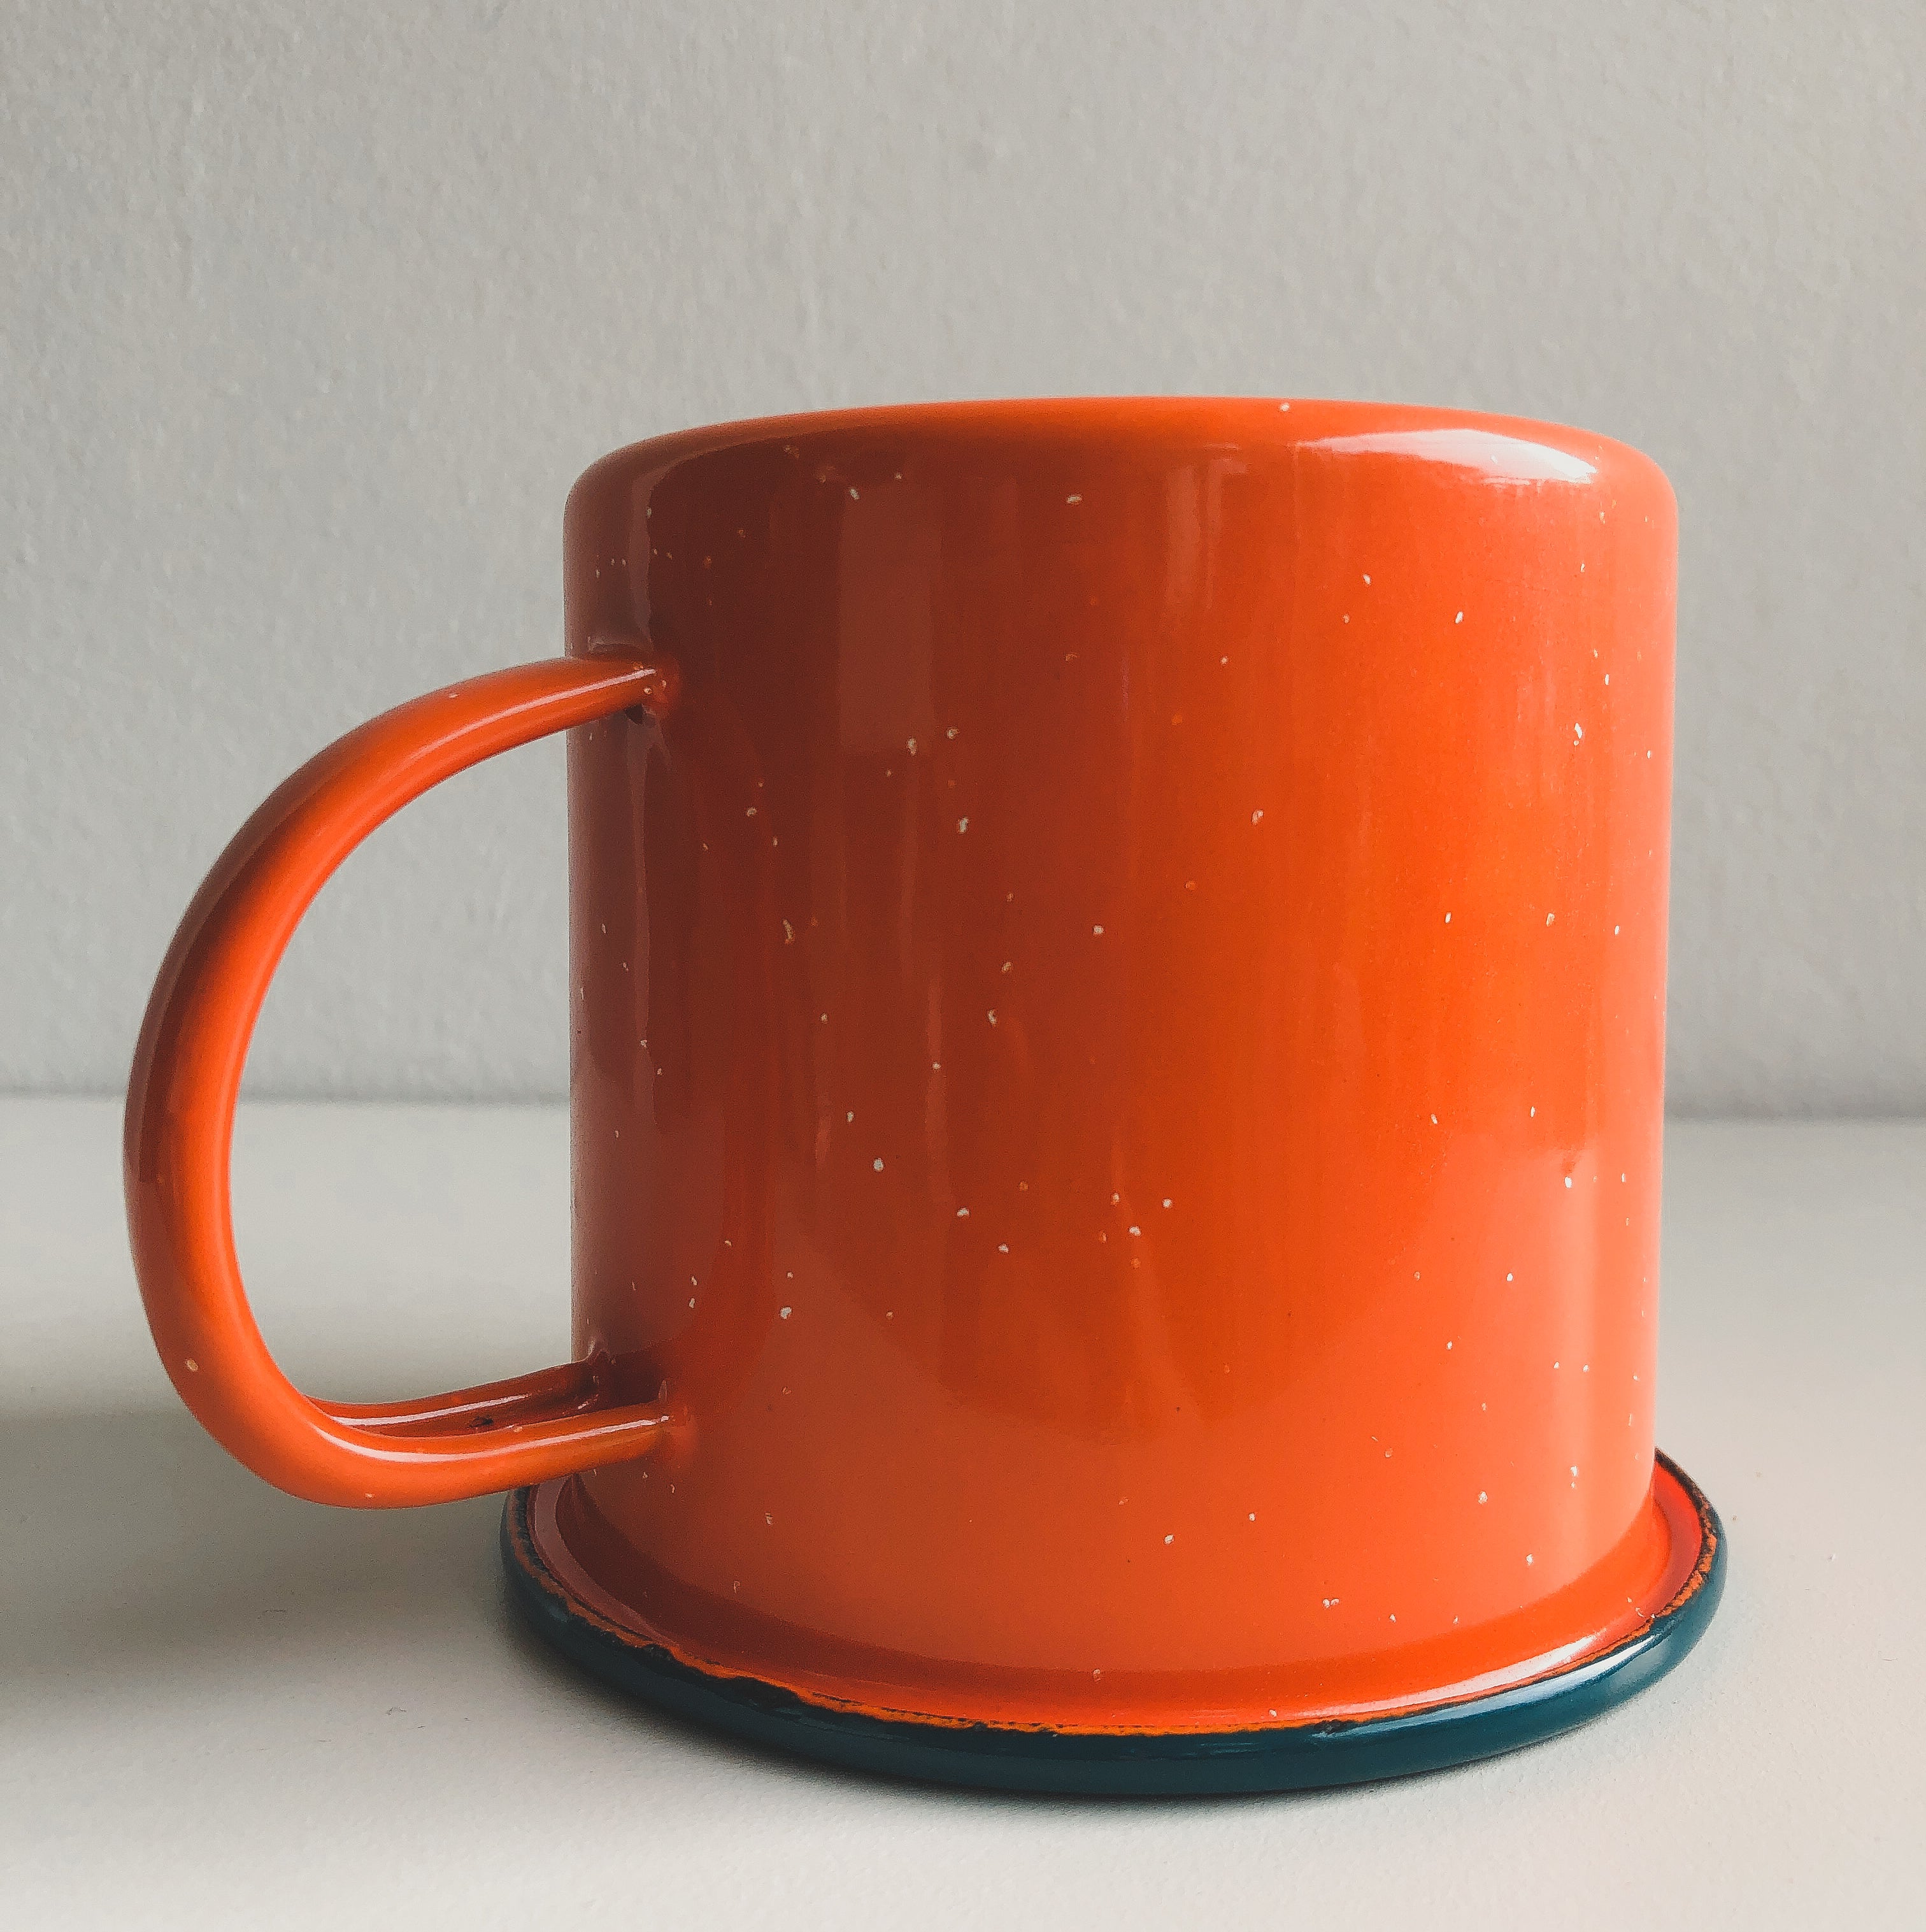 Orange Enamel Coffee Mug by PROSE Tabletop